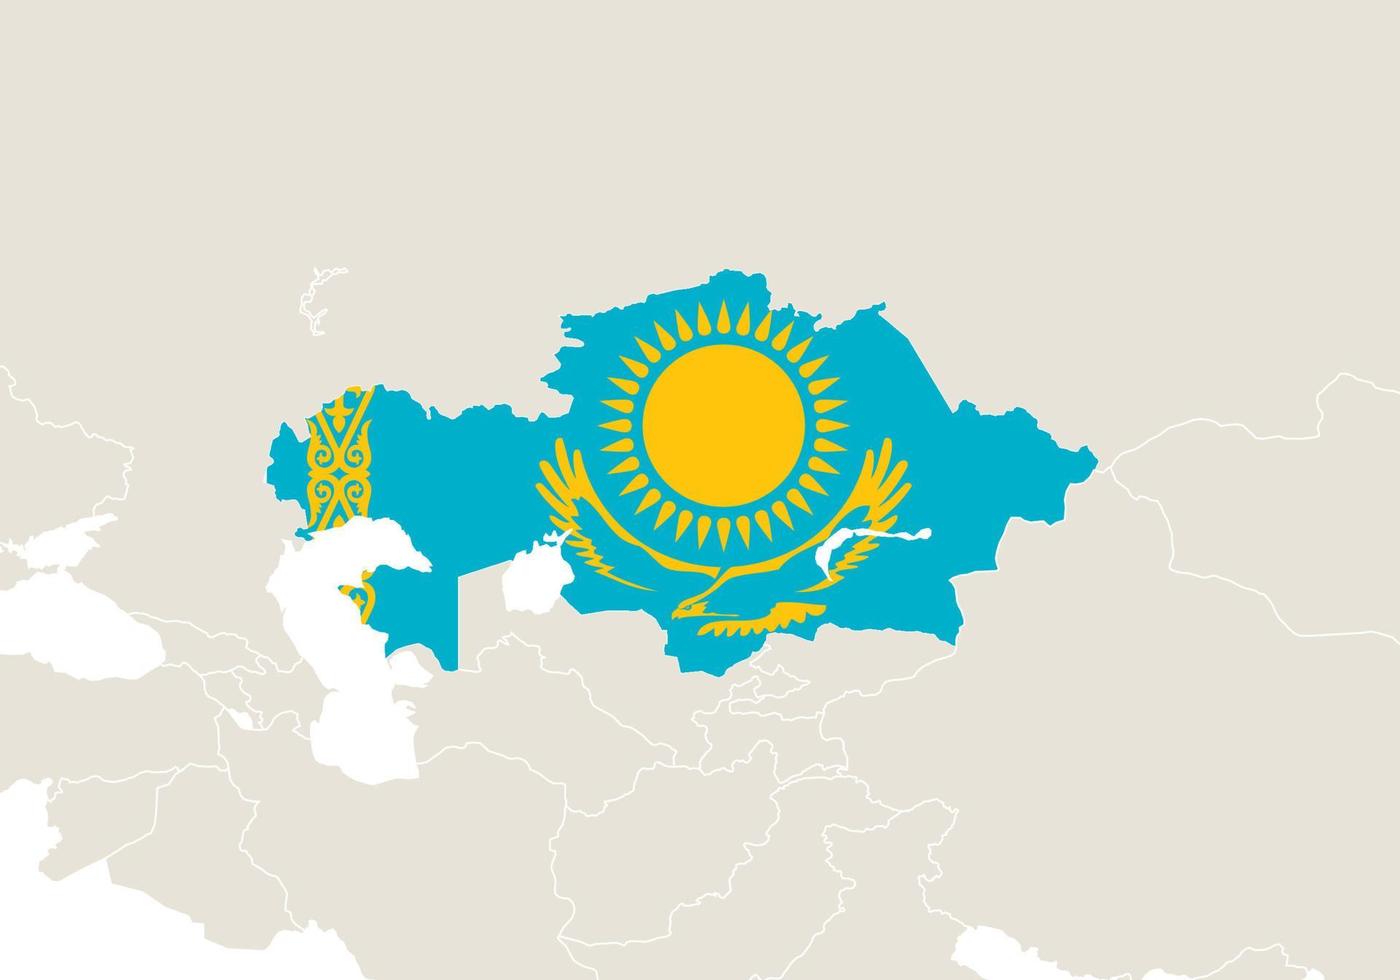 asia con el mapa de kazajstán resaltado. vector